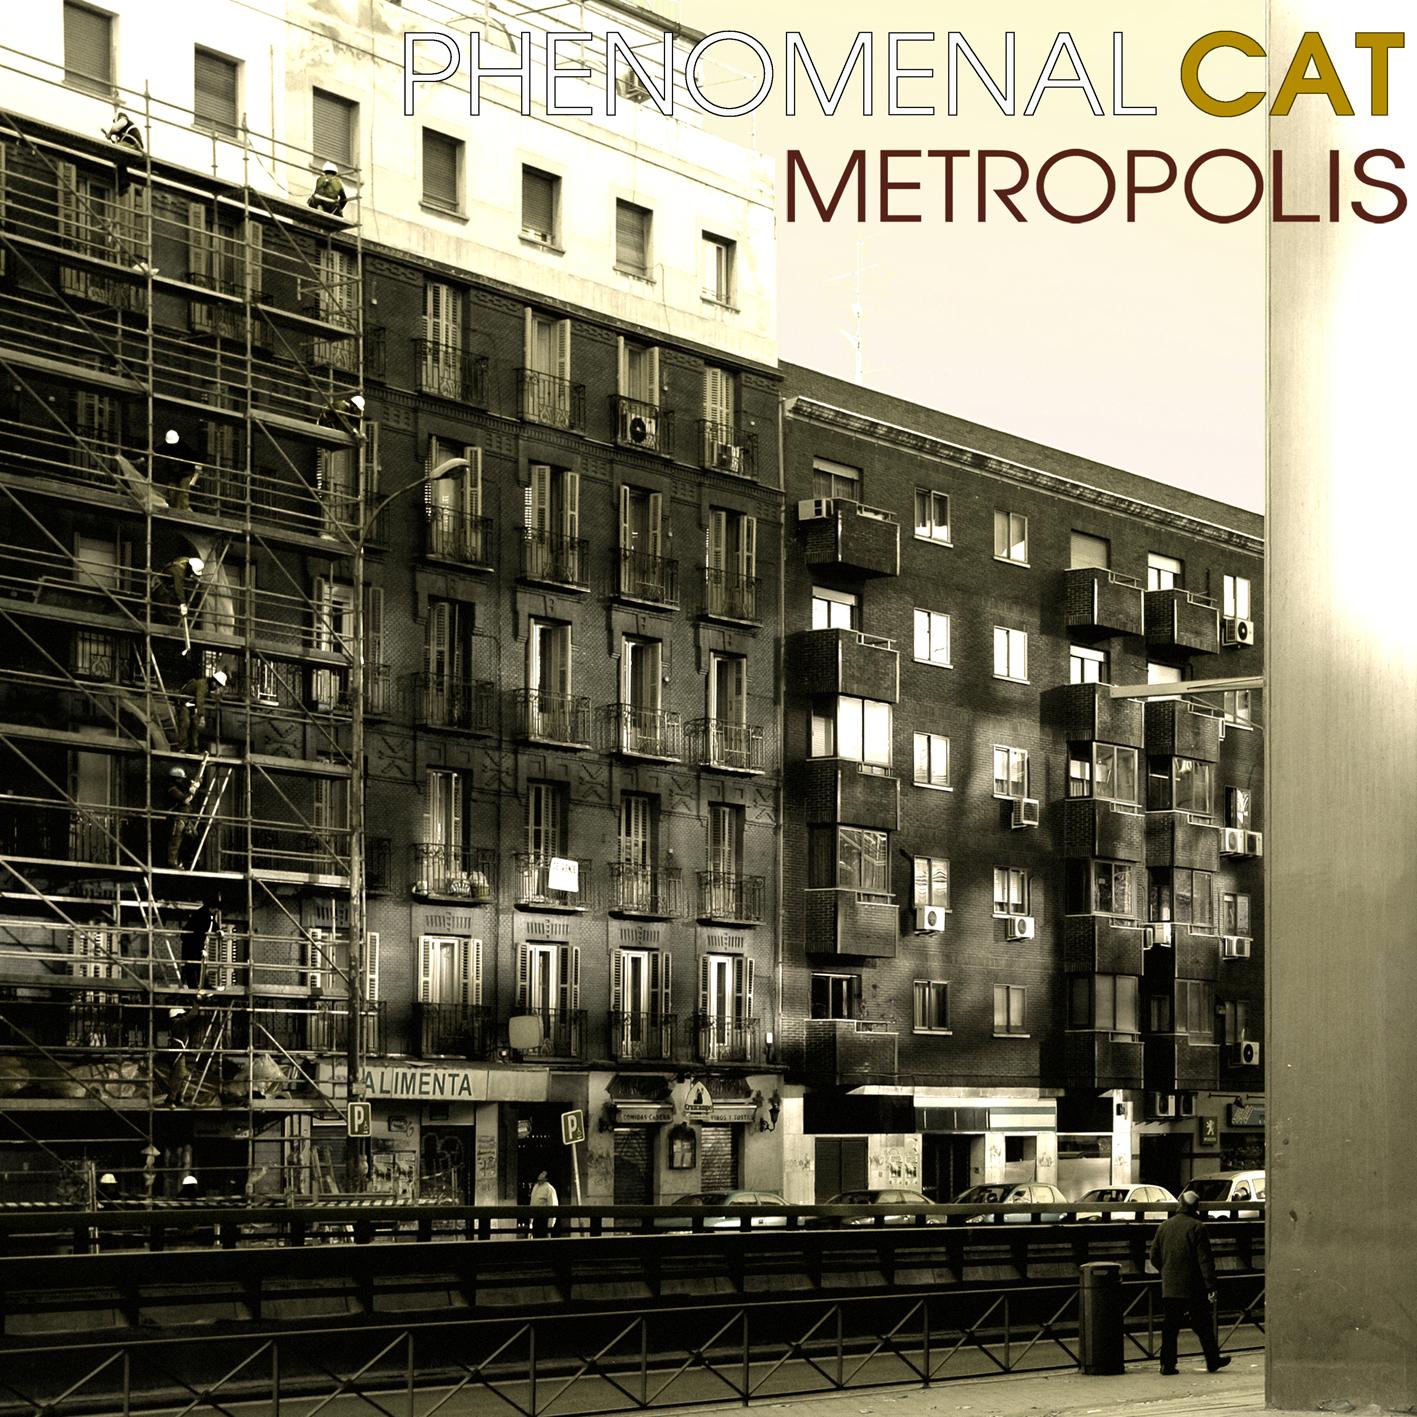 Reseña: “Metropolis” de Phenomenal Cat